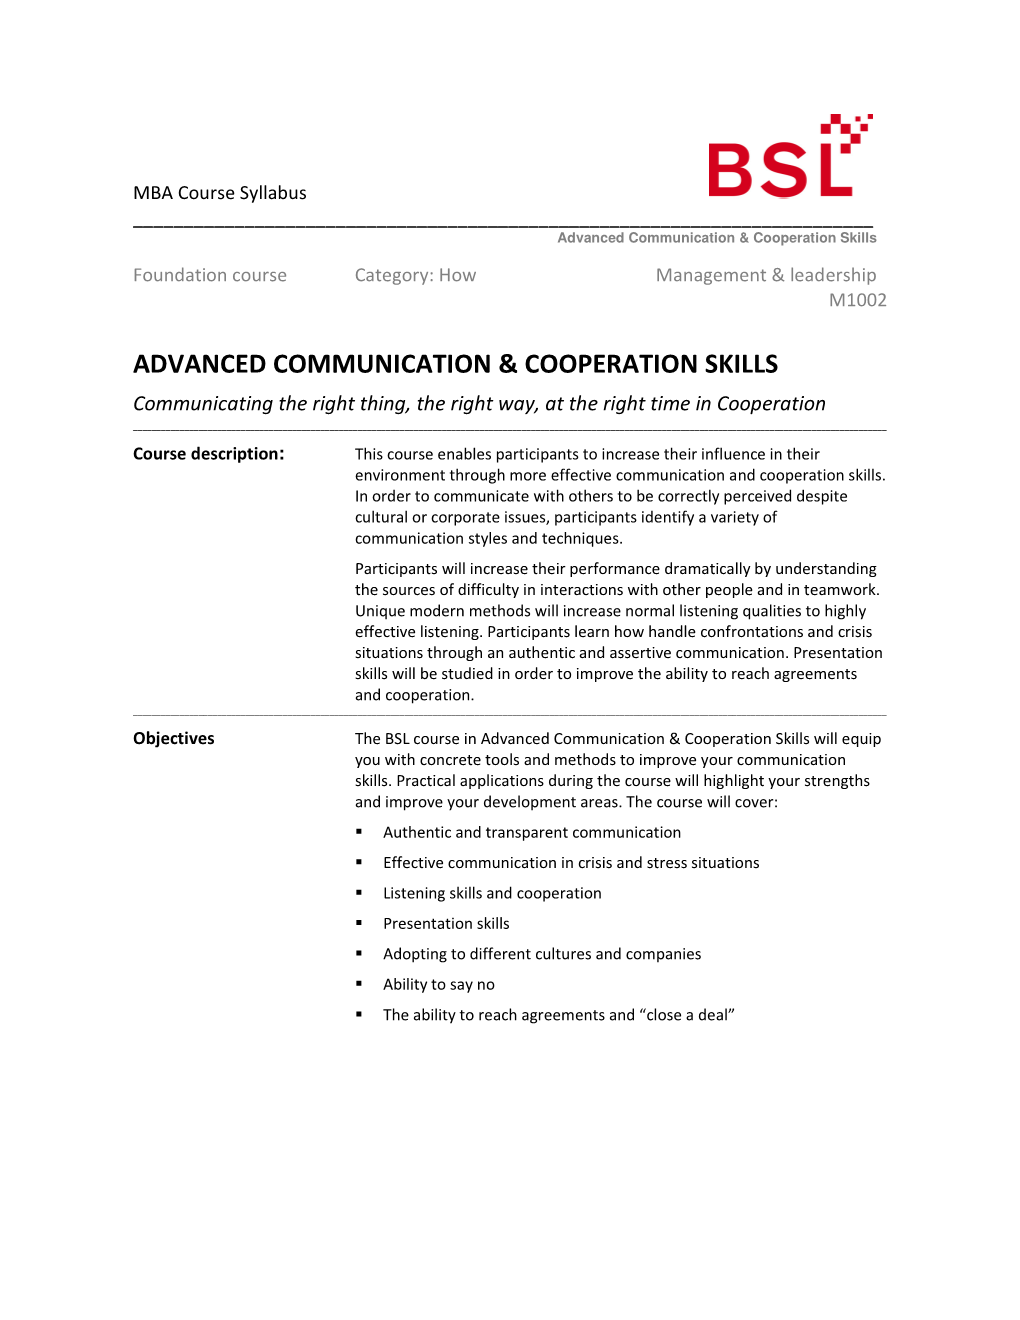 Advanced Communication & Cooperation Skills